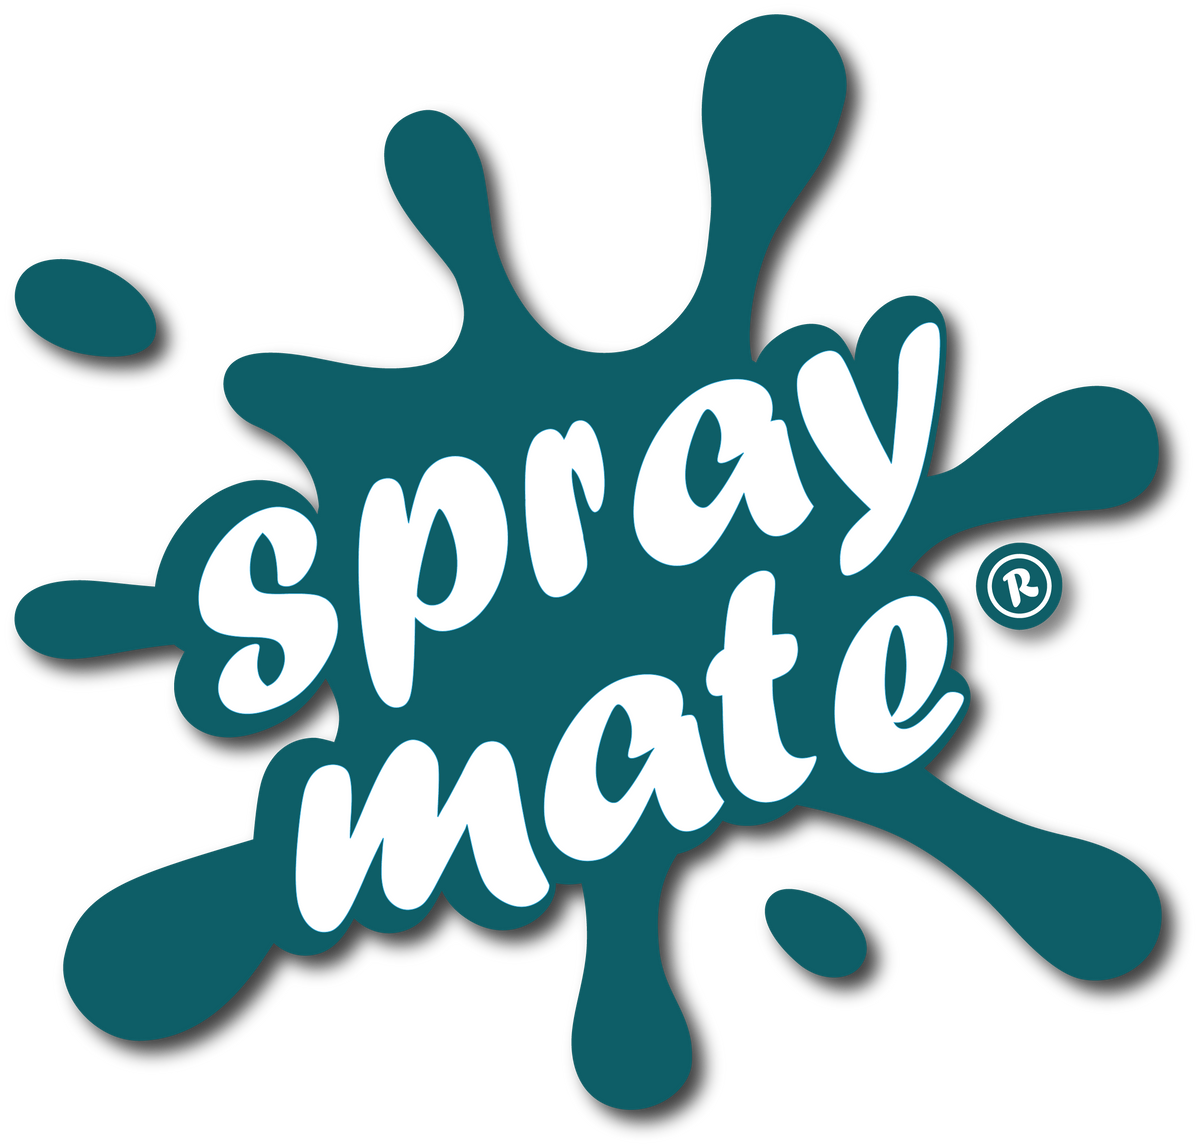 spraymate logo